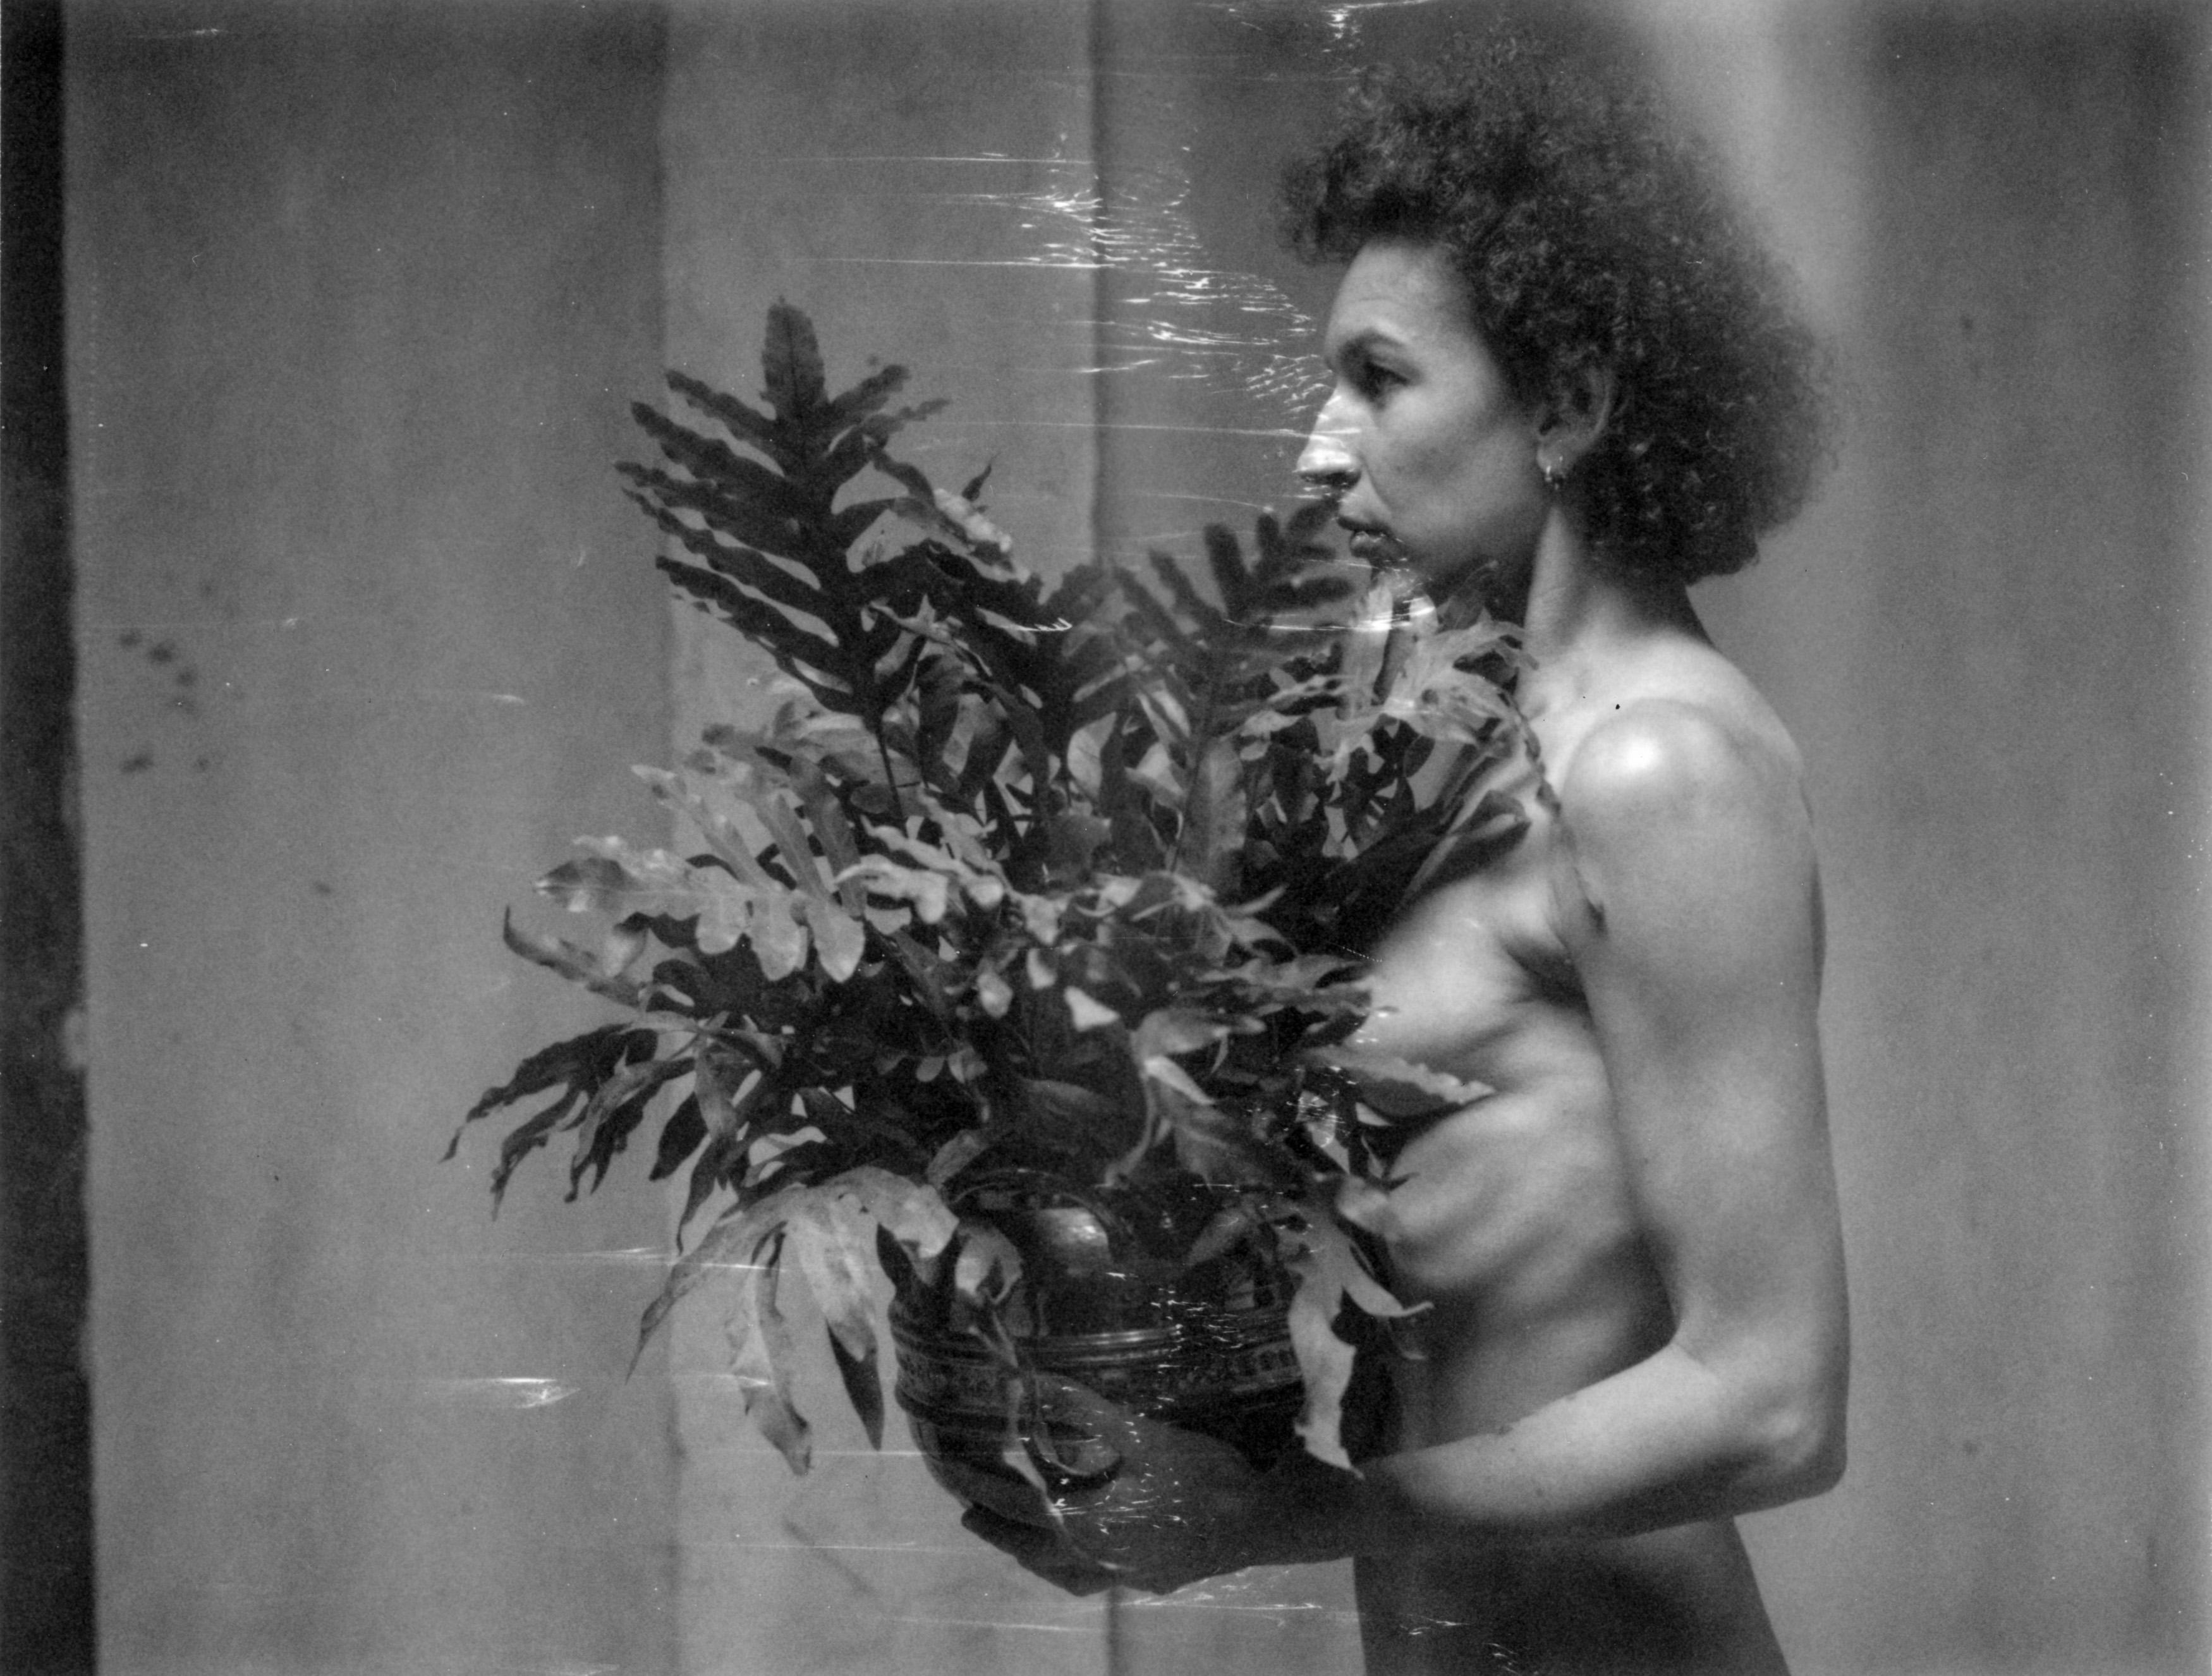 Kirsten Thys van den Audenaerde Black and White Photograph - Carried away -Contemporary, Polaroid, Black and White, Women, 21st Century, Nude